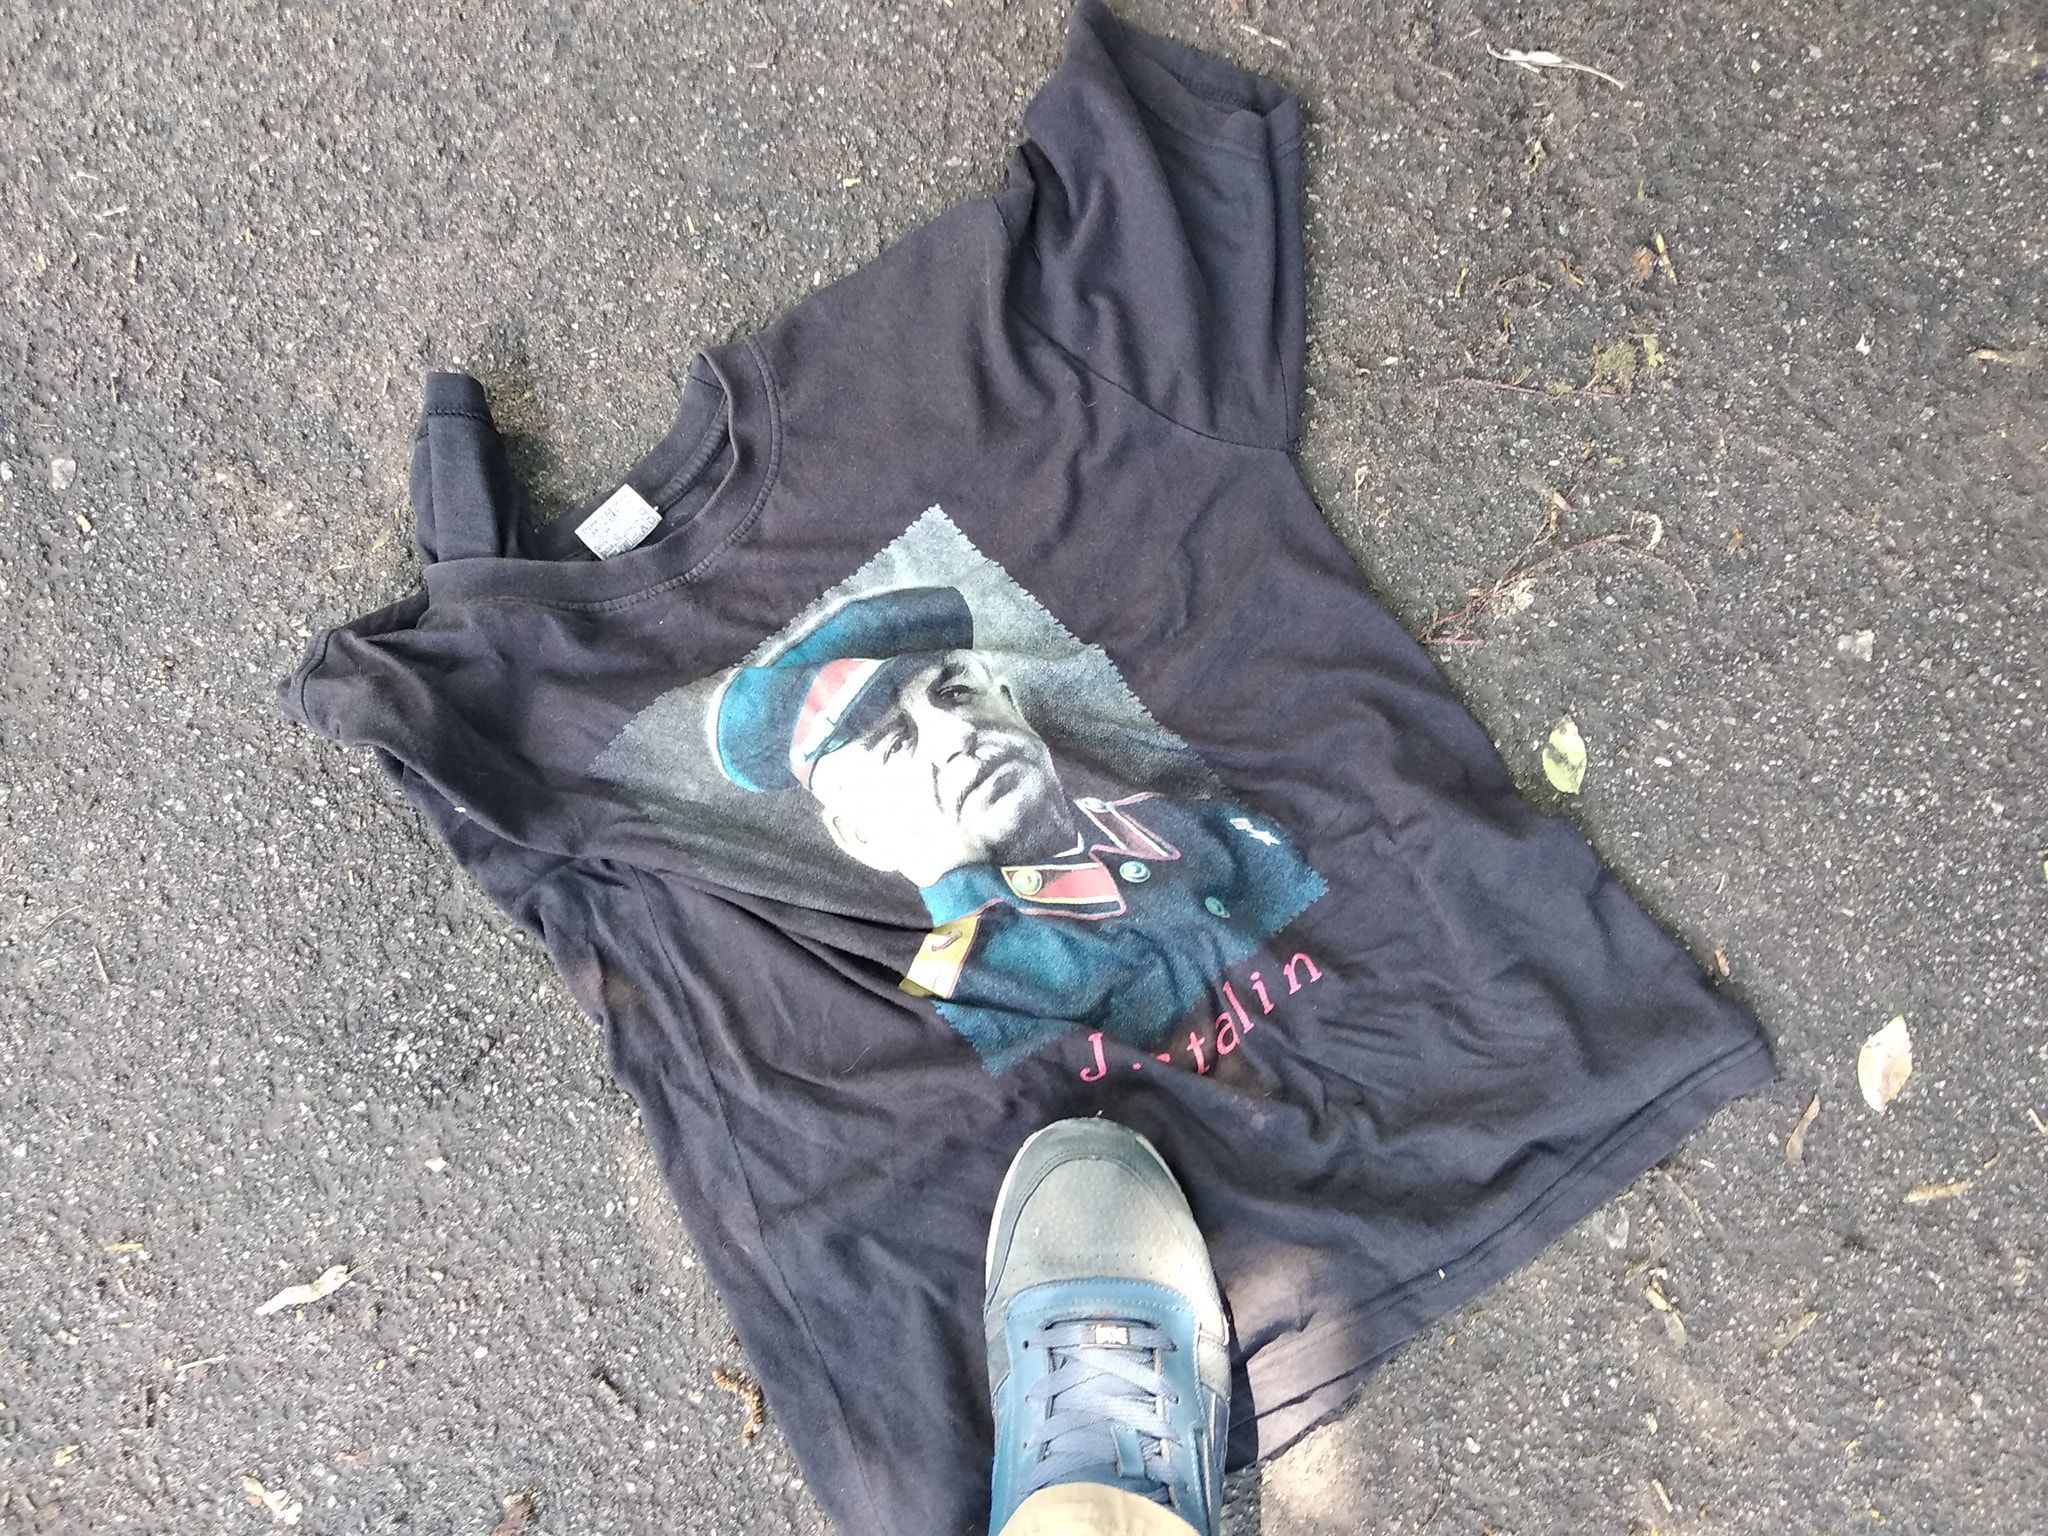 По Киеву разгуливал мужчина в футболке с портретом Сталина: фаната вождя СССР проучили в метро